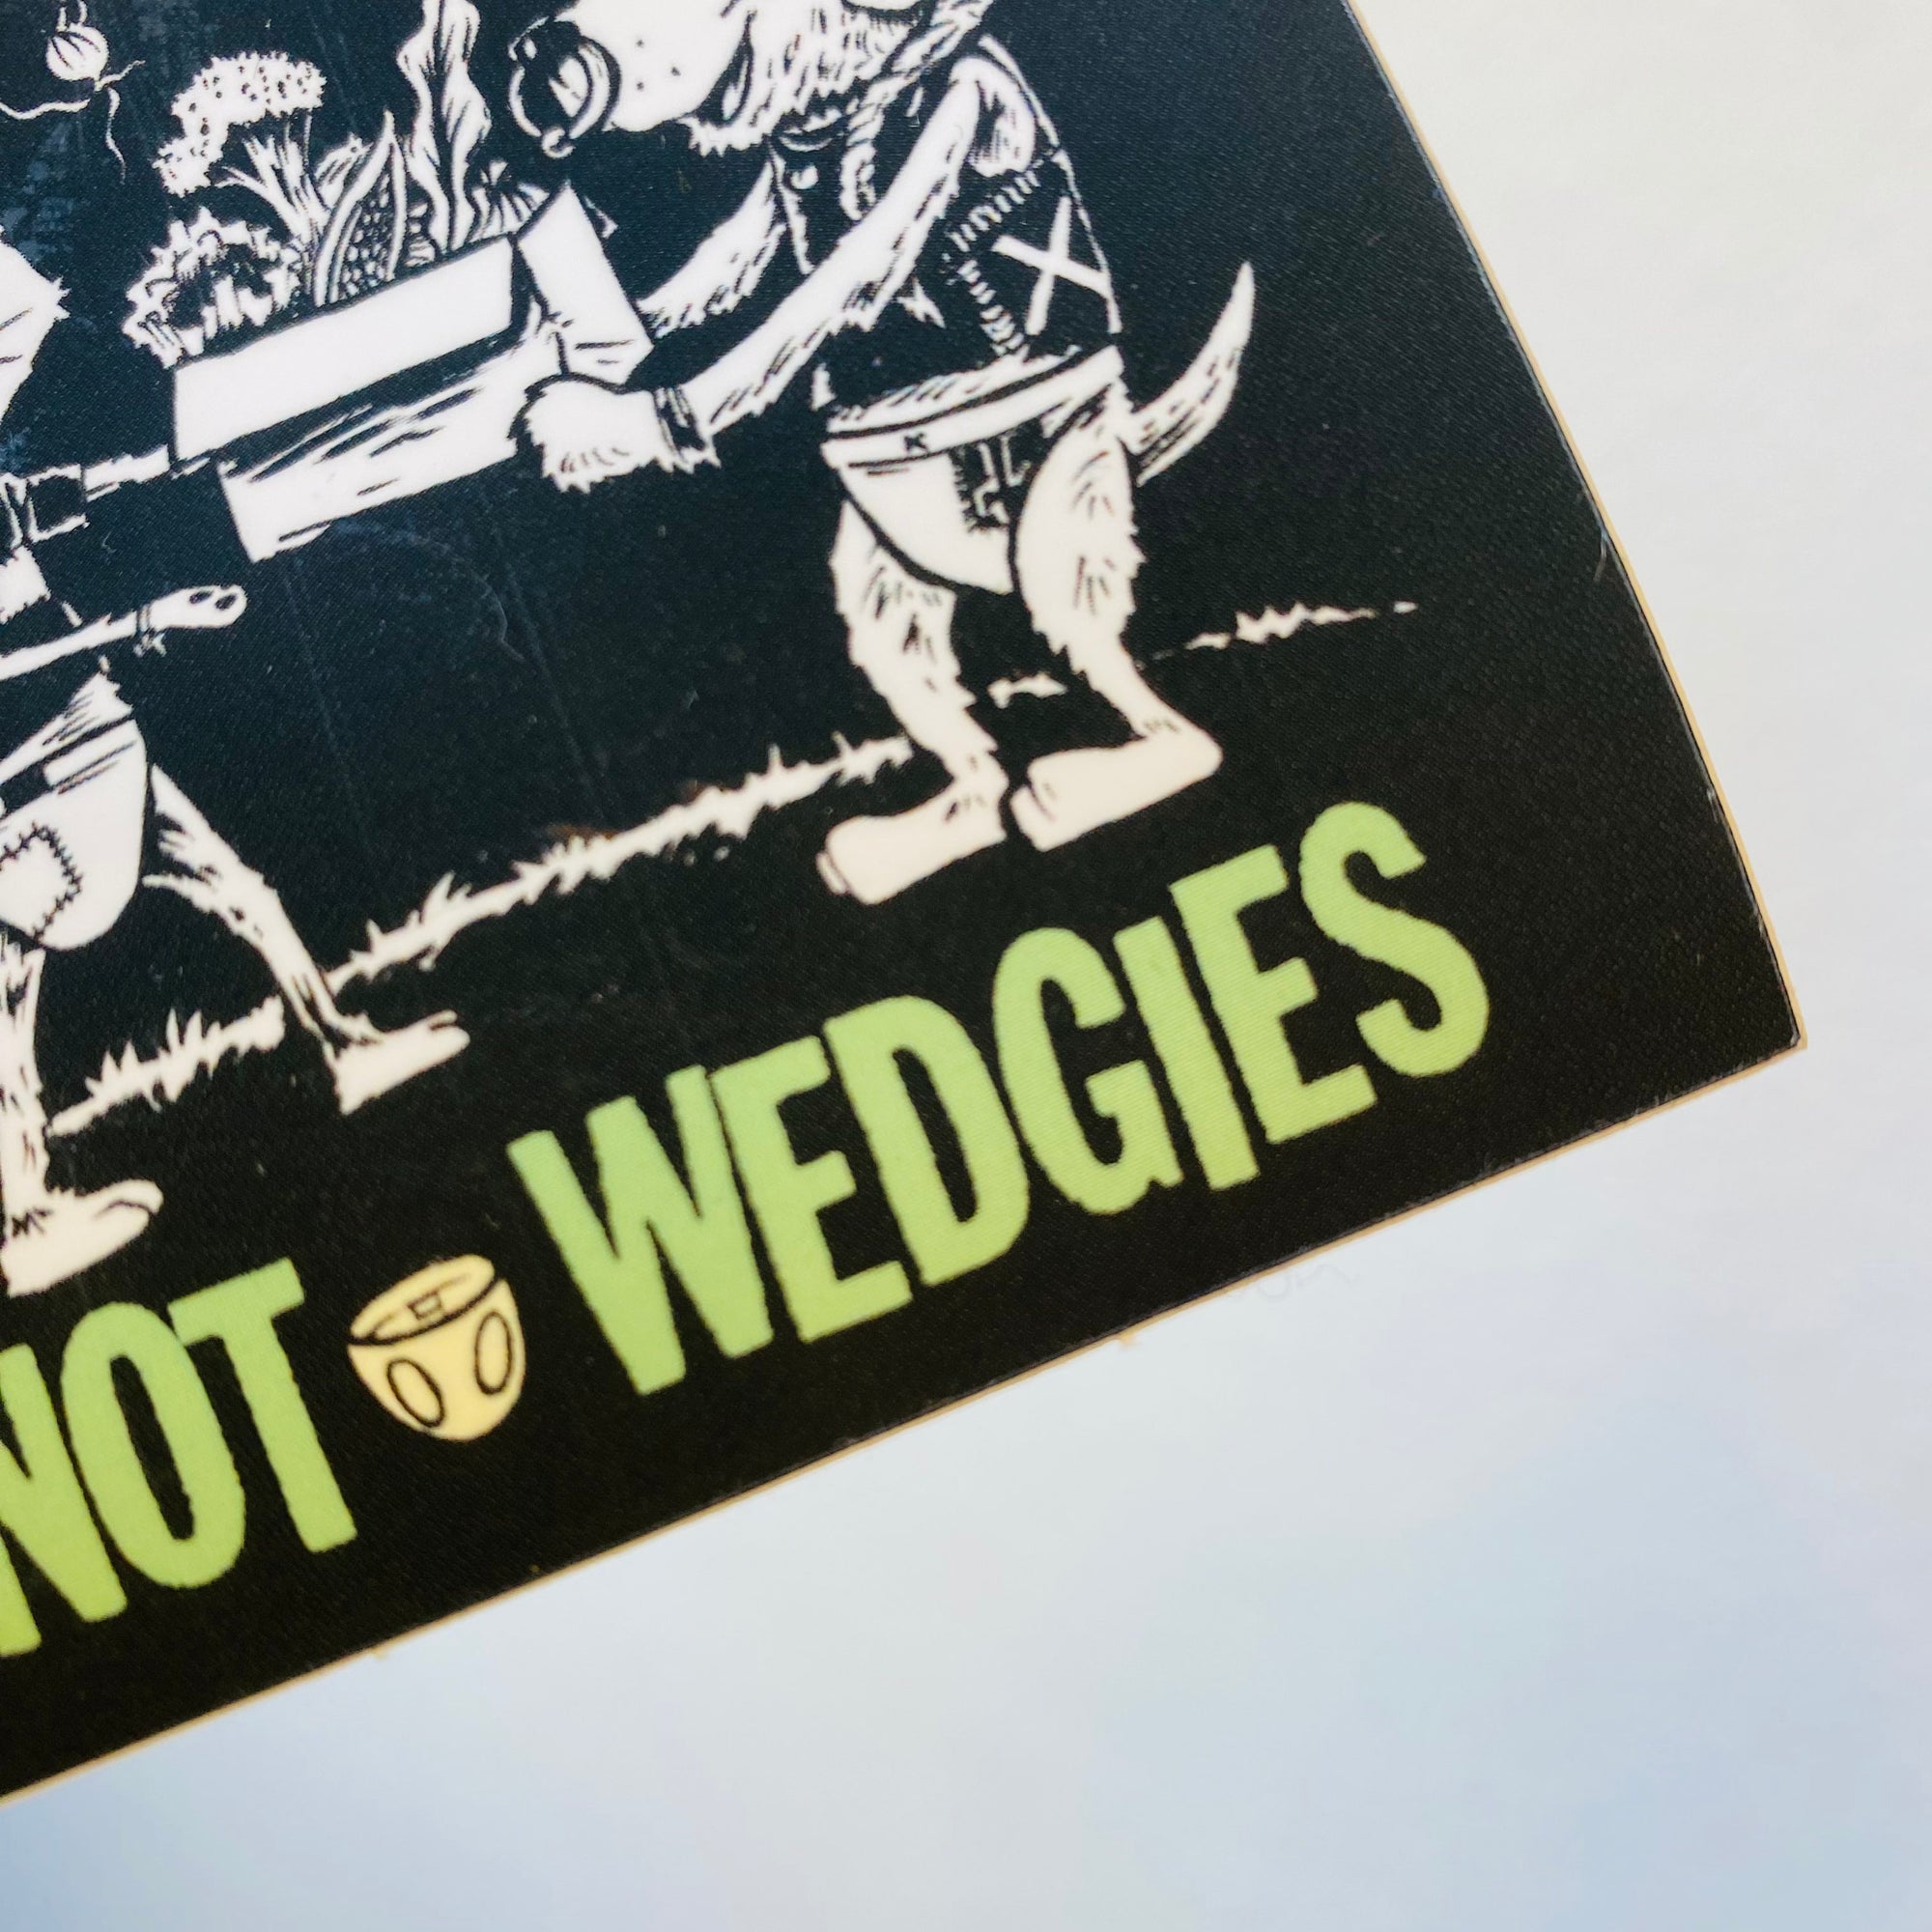 Veggies Not Wedgies Sticker